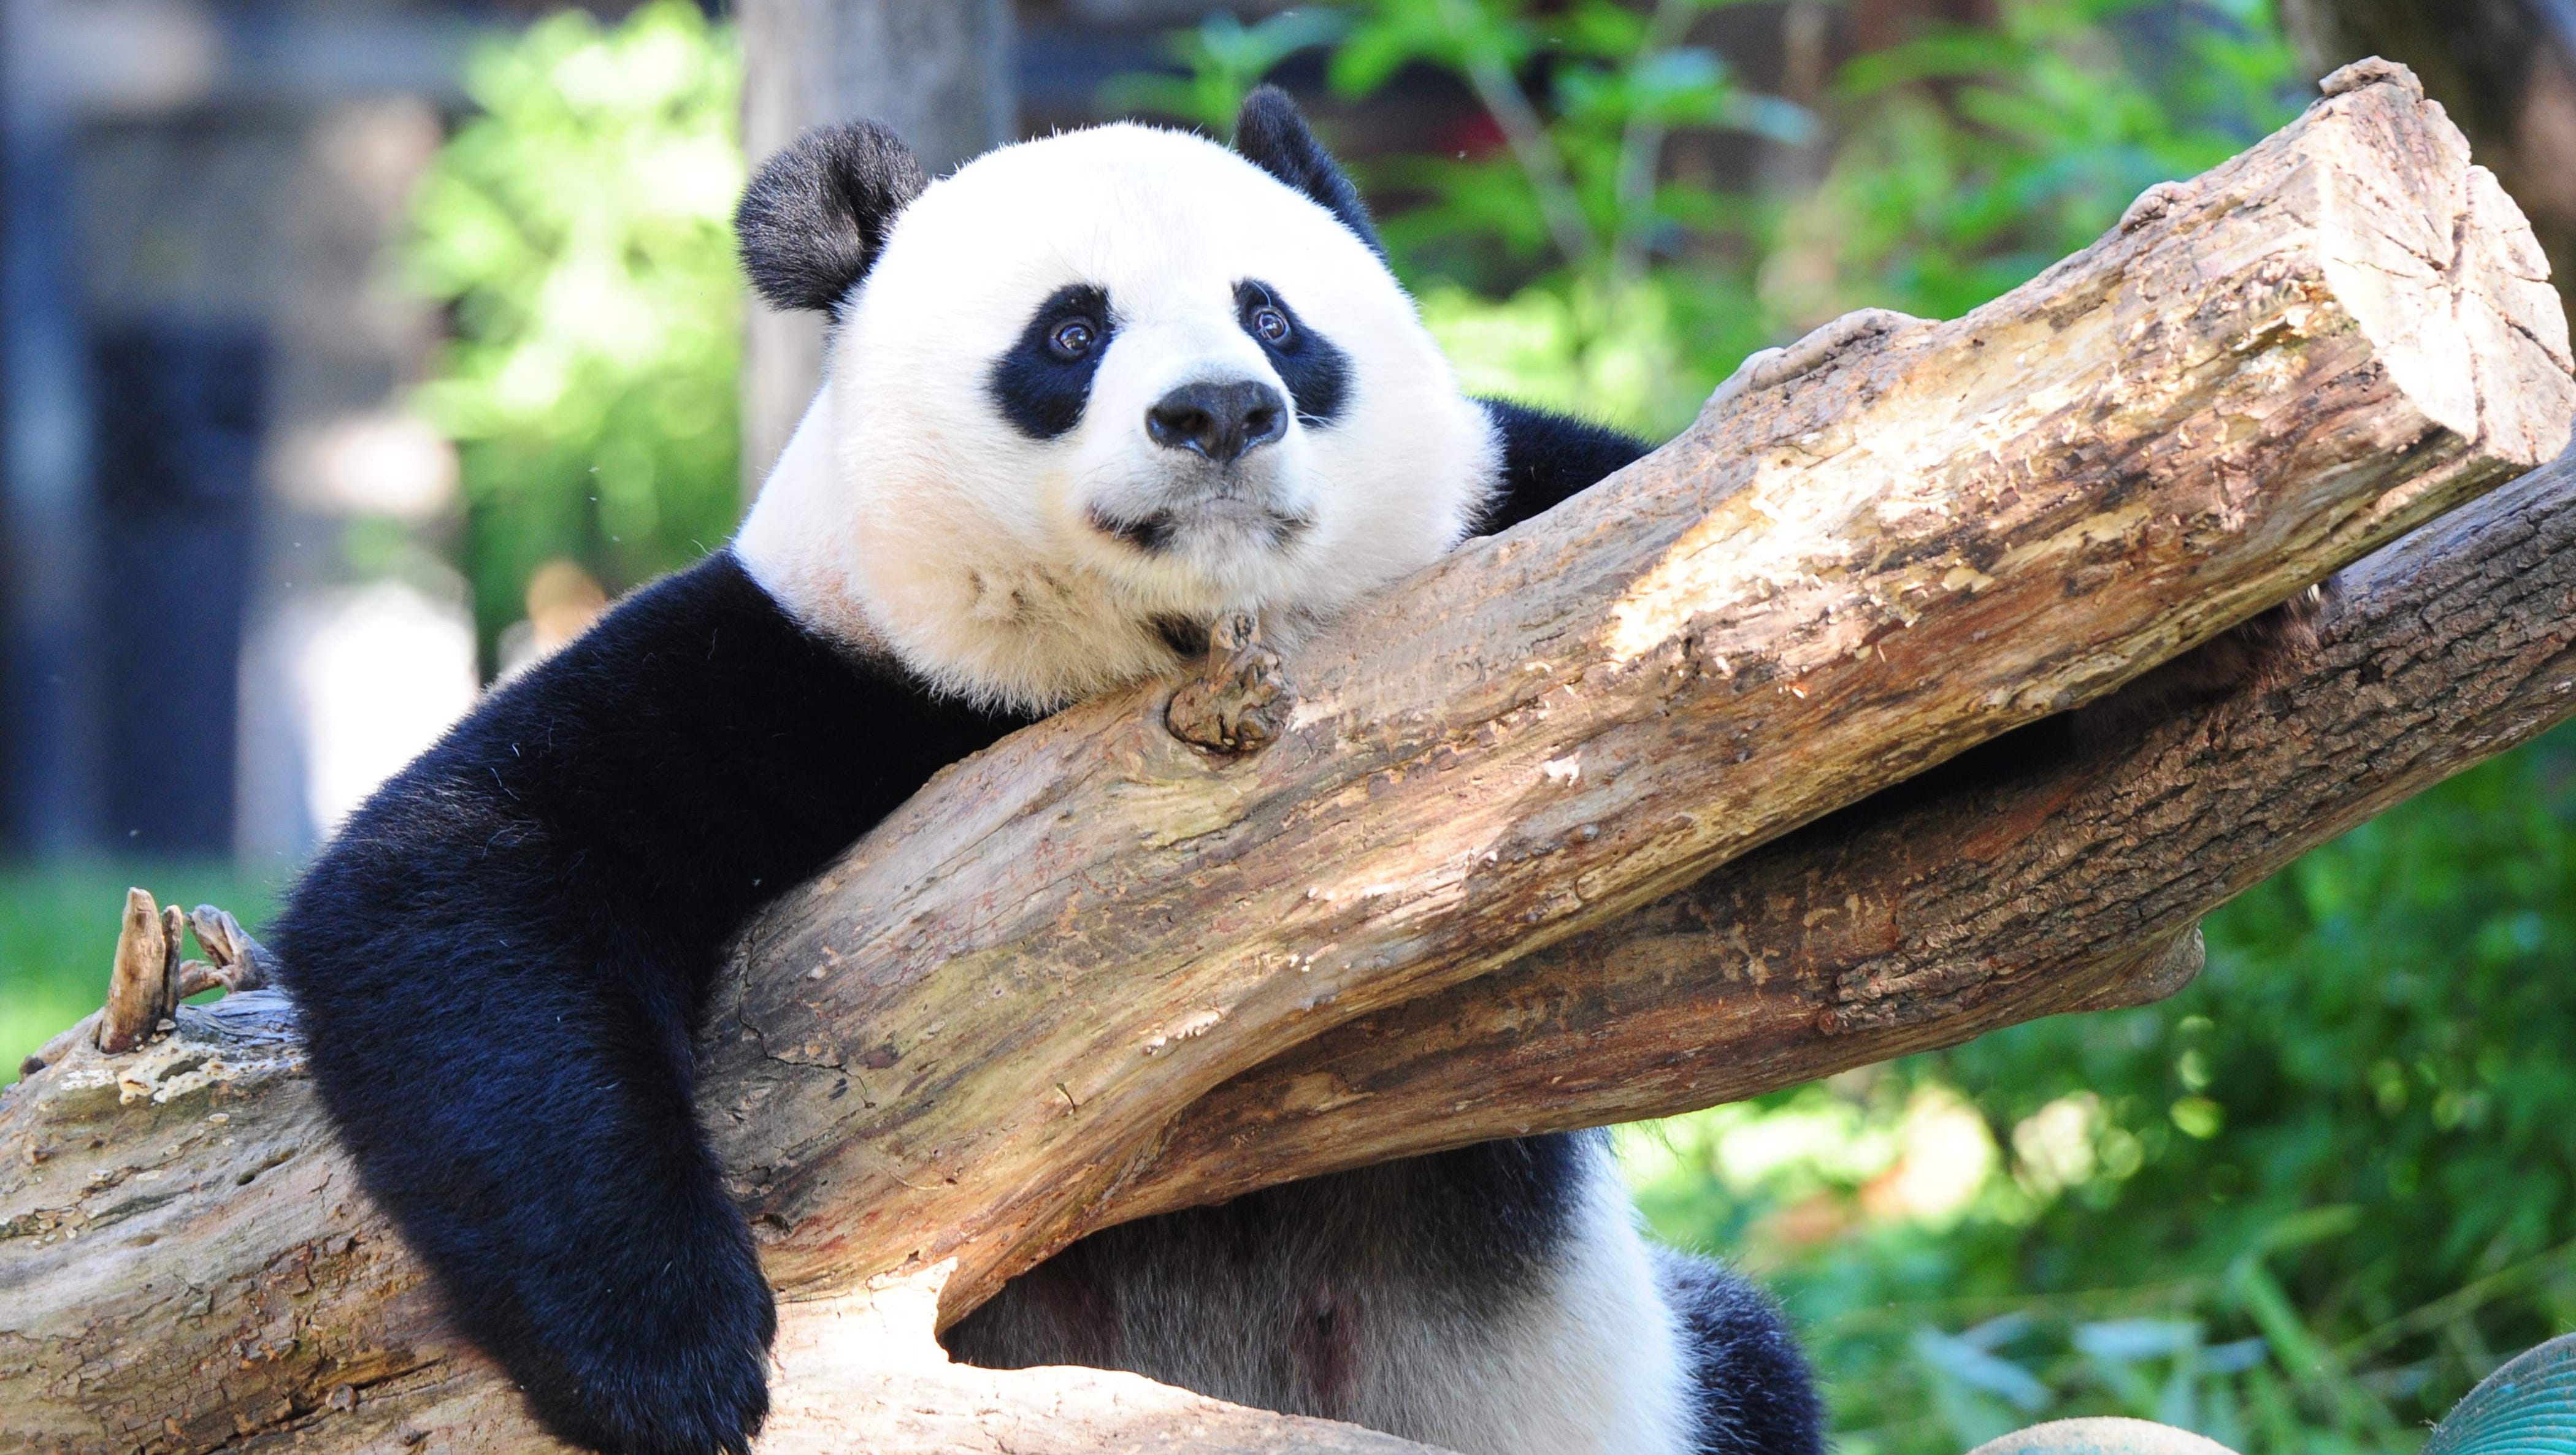 Giant panda off endangered list; eastern gorilla 'critically endangered'